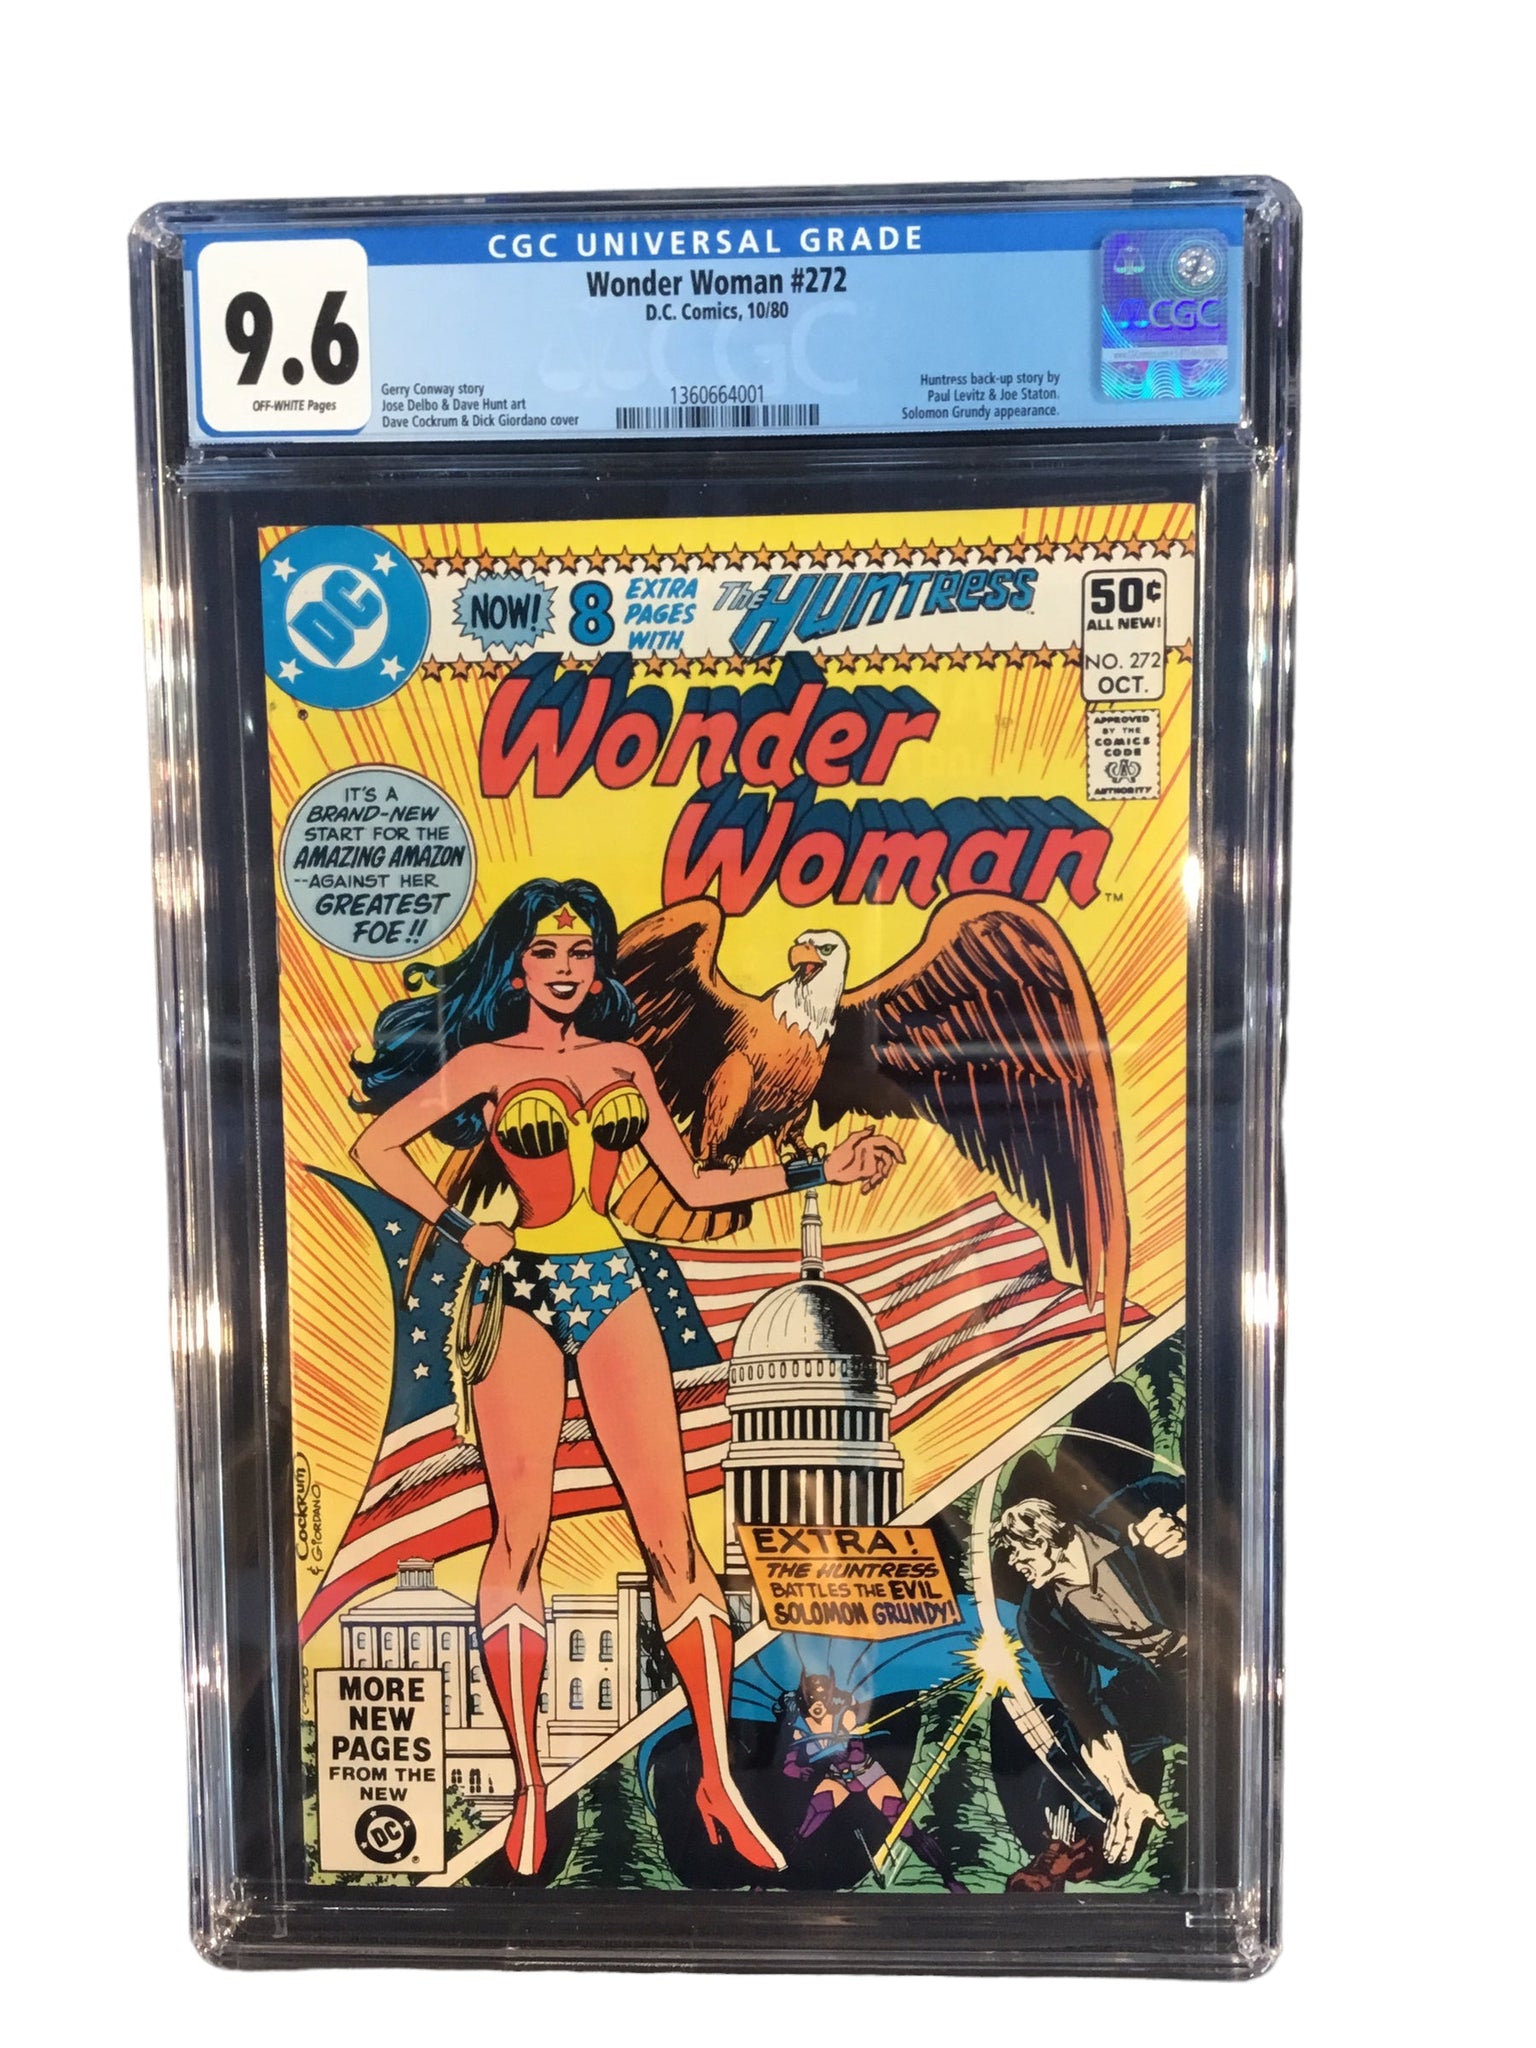 Vintage 1980's Wonder Woman Underoos PACKAGE ONLY empty #3